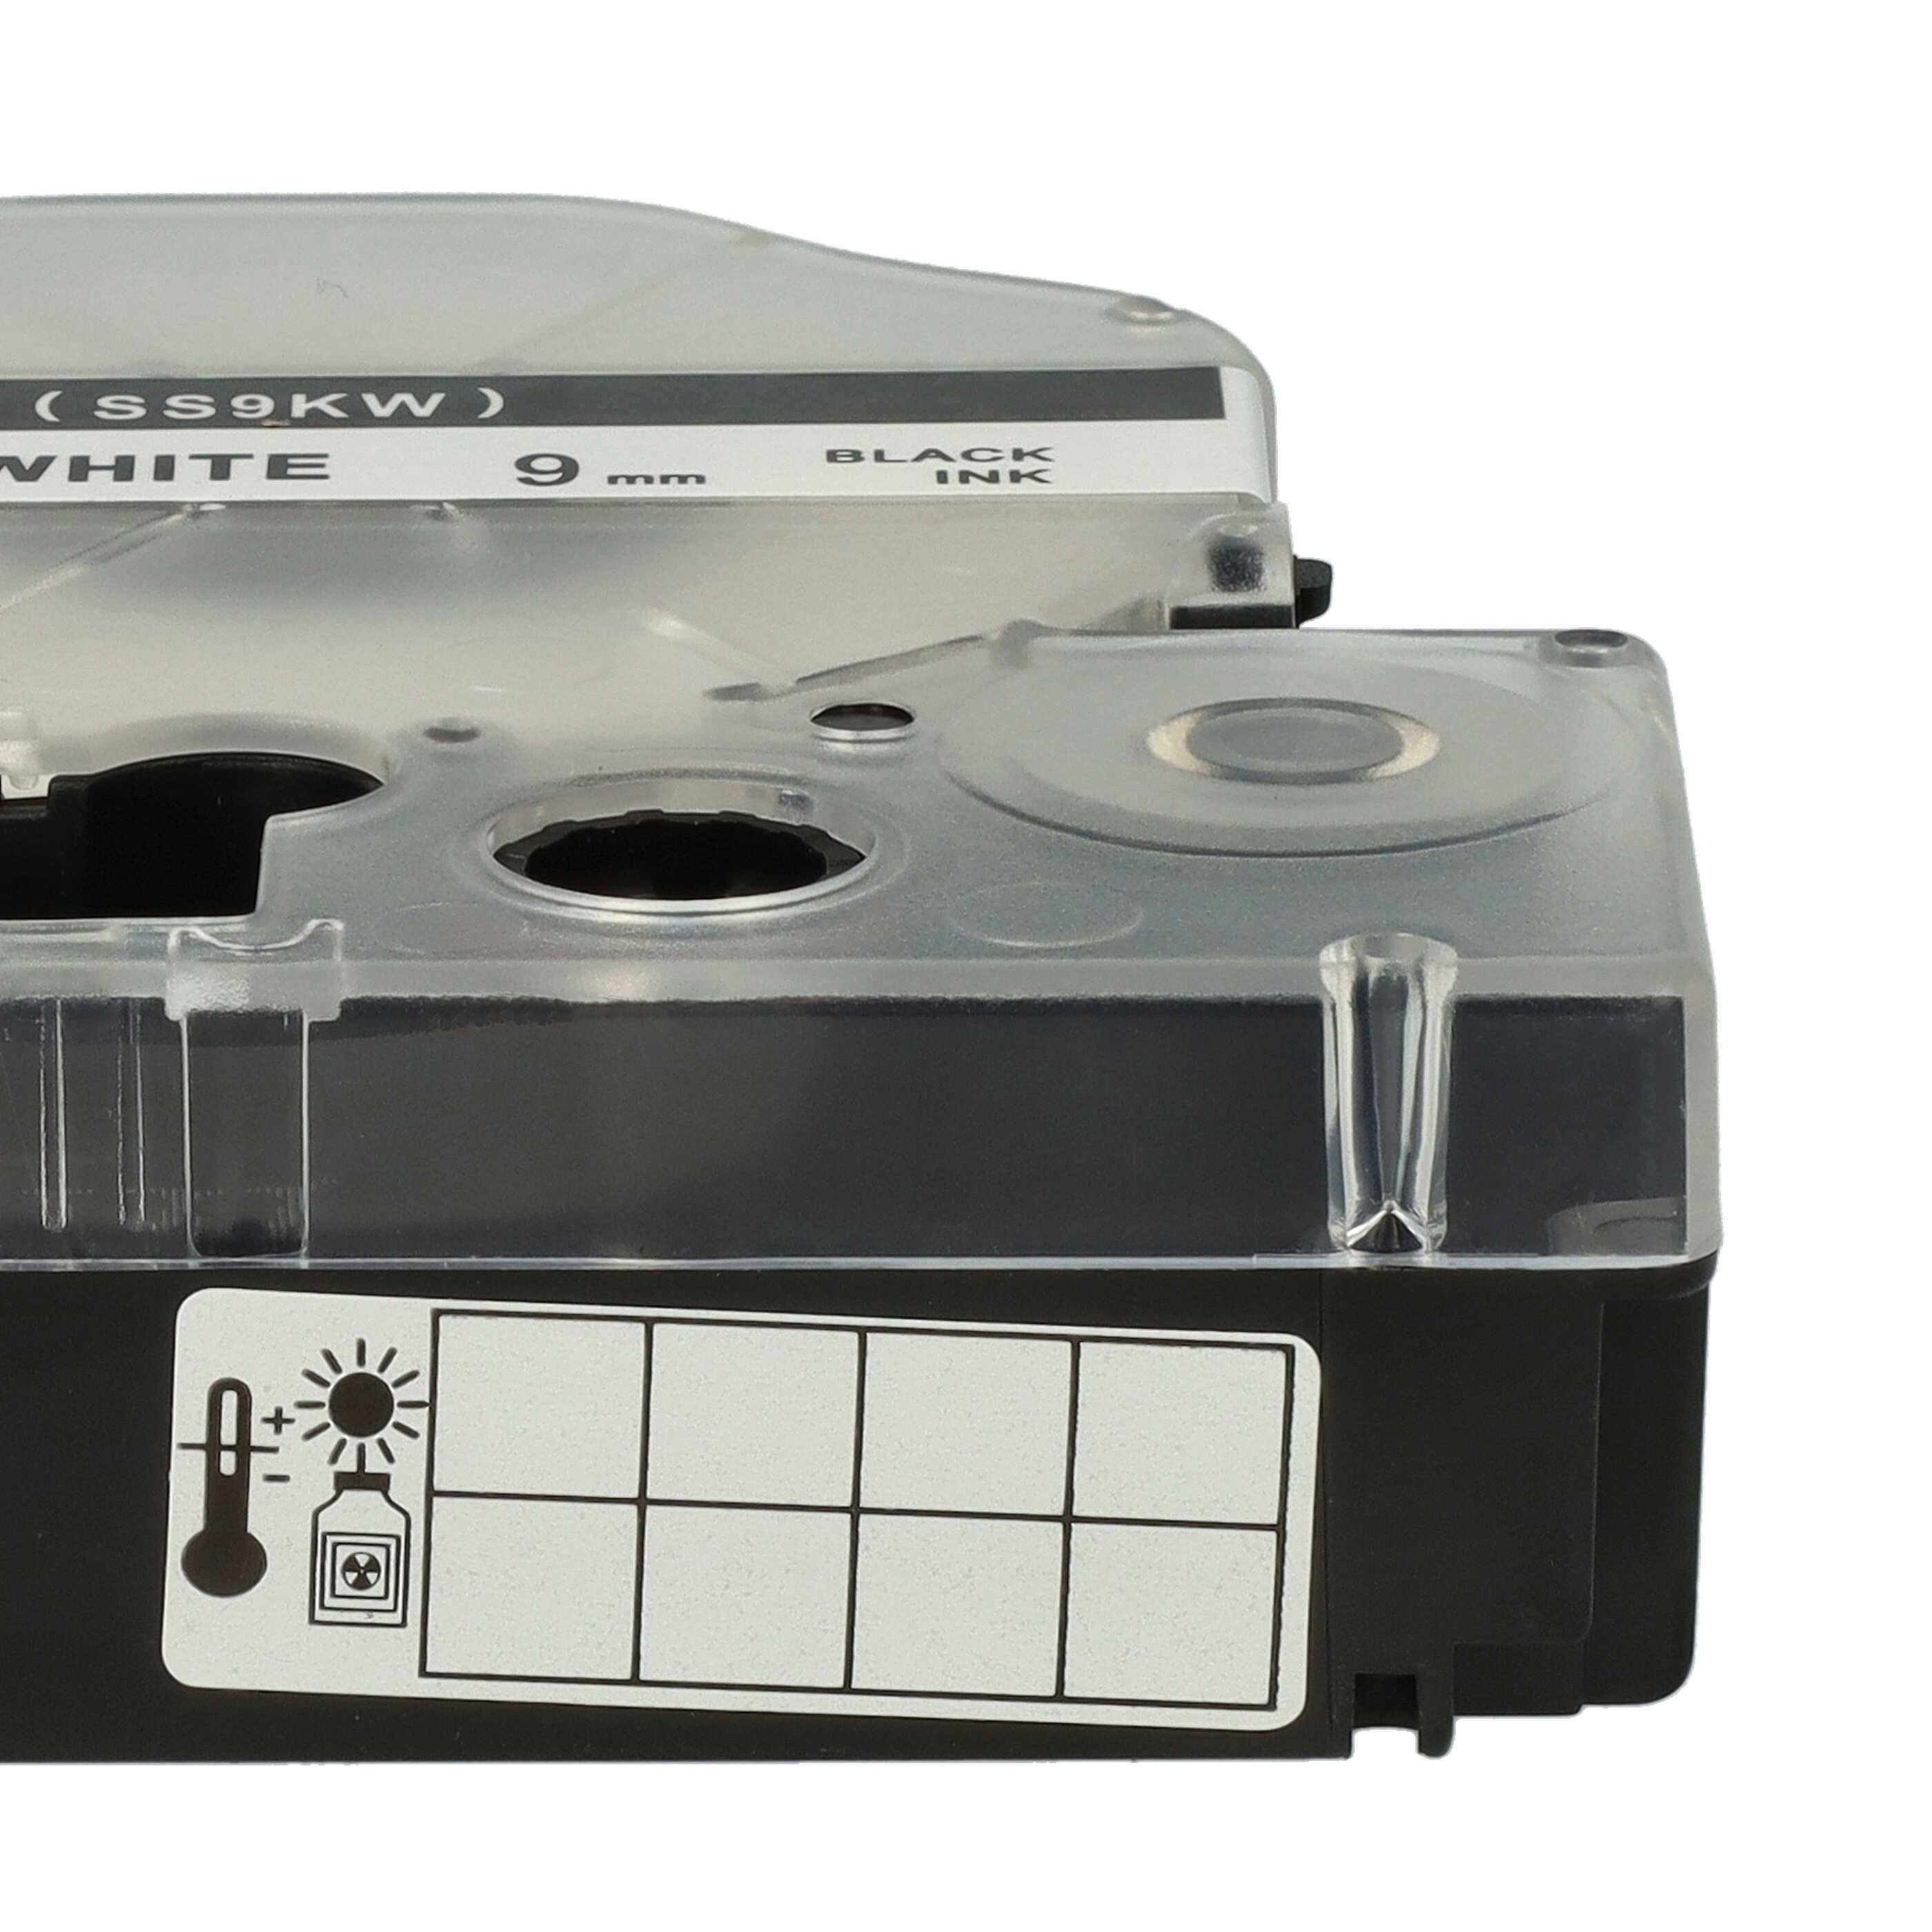 2x Casete cinta escritura reemplaza Epson SS9KW, LC-3WBN Negro su Blanco